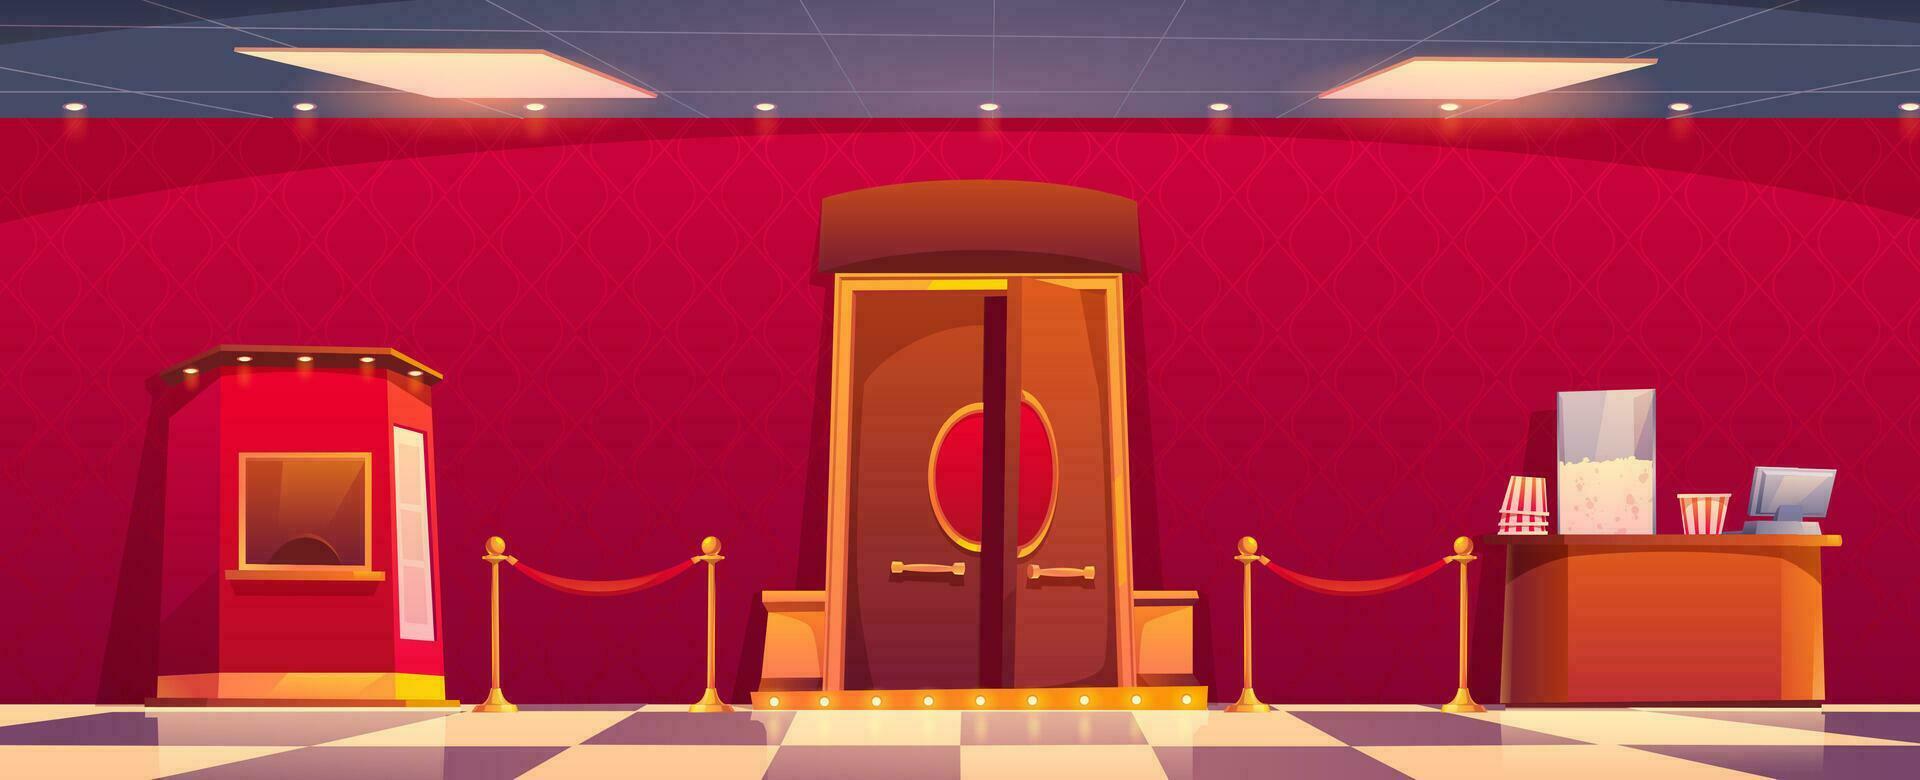 cinema porta Entrada dentro corredor interior desenho animado vetor